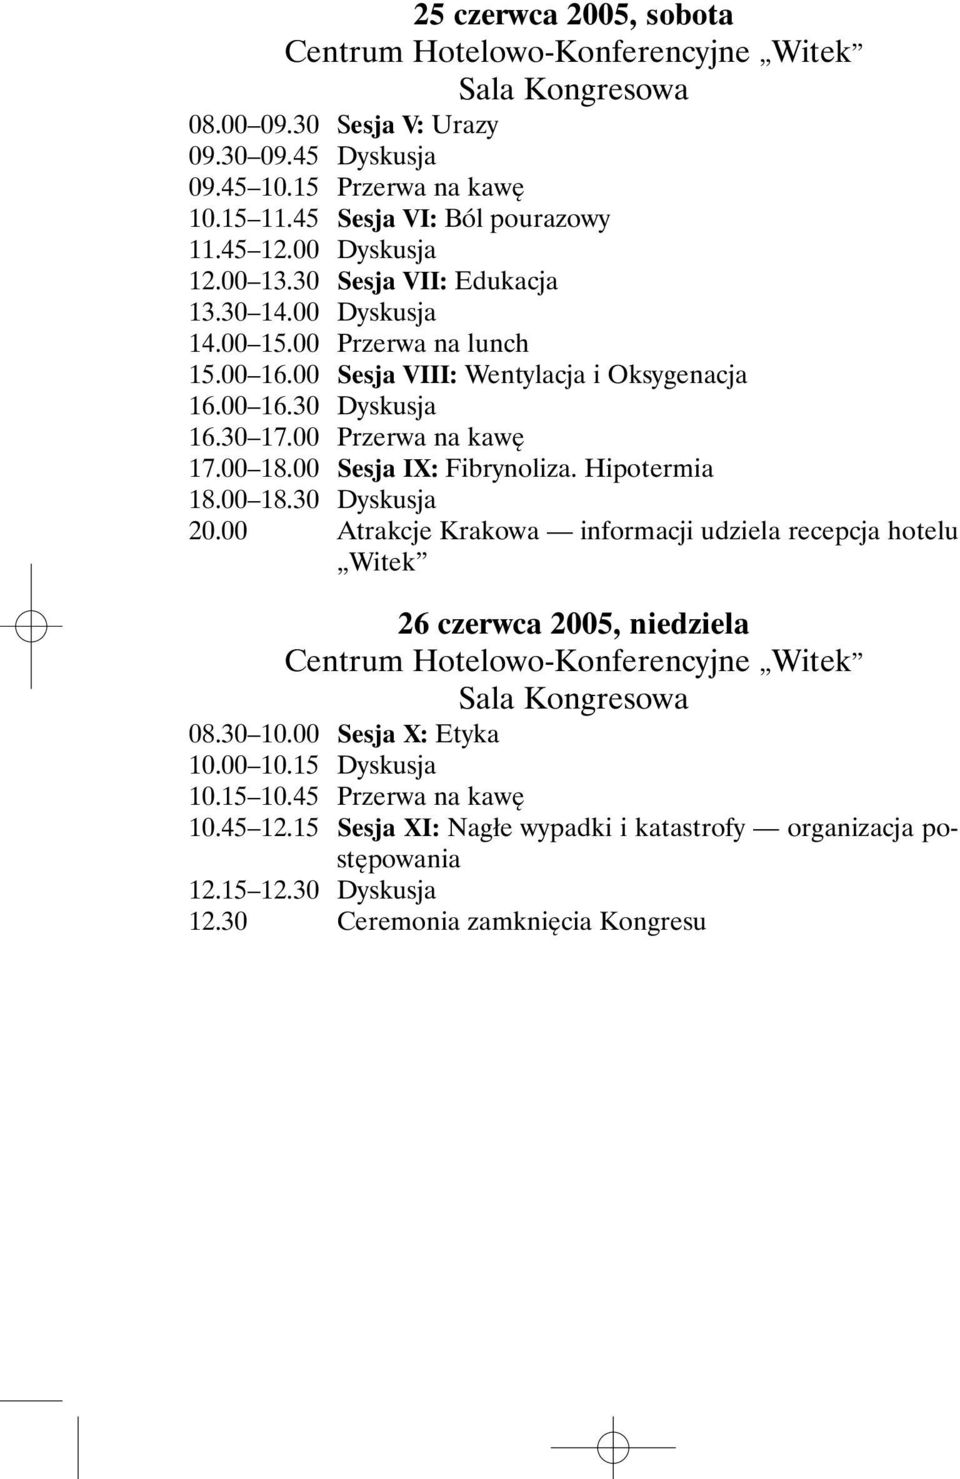 00 18.00 Sesja IX: Fibrynoliza. Hipotermia 18.00 18.30 Dyskusja 20.